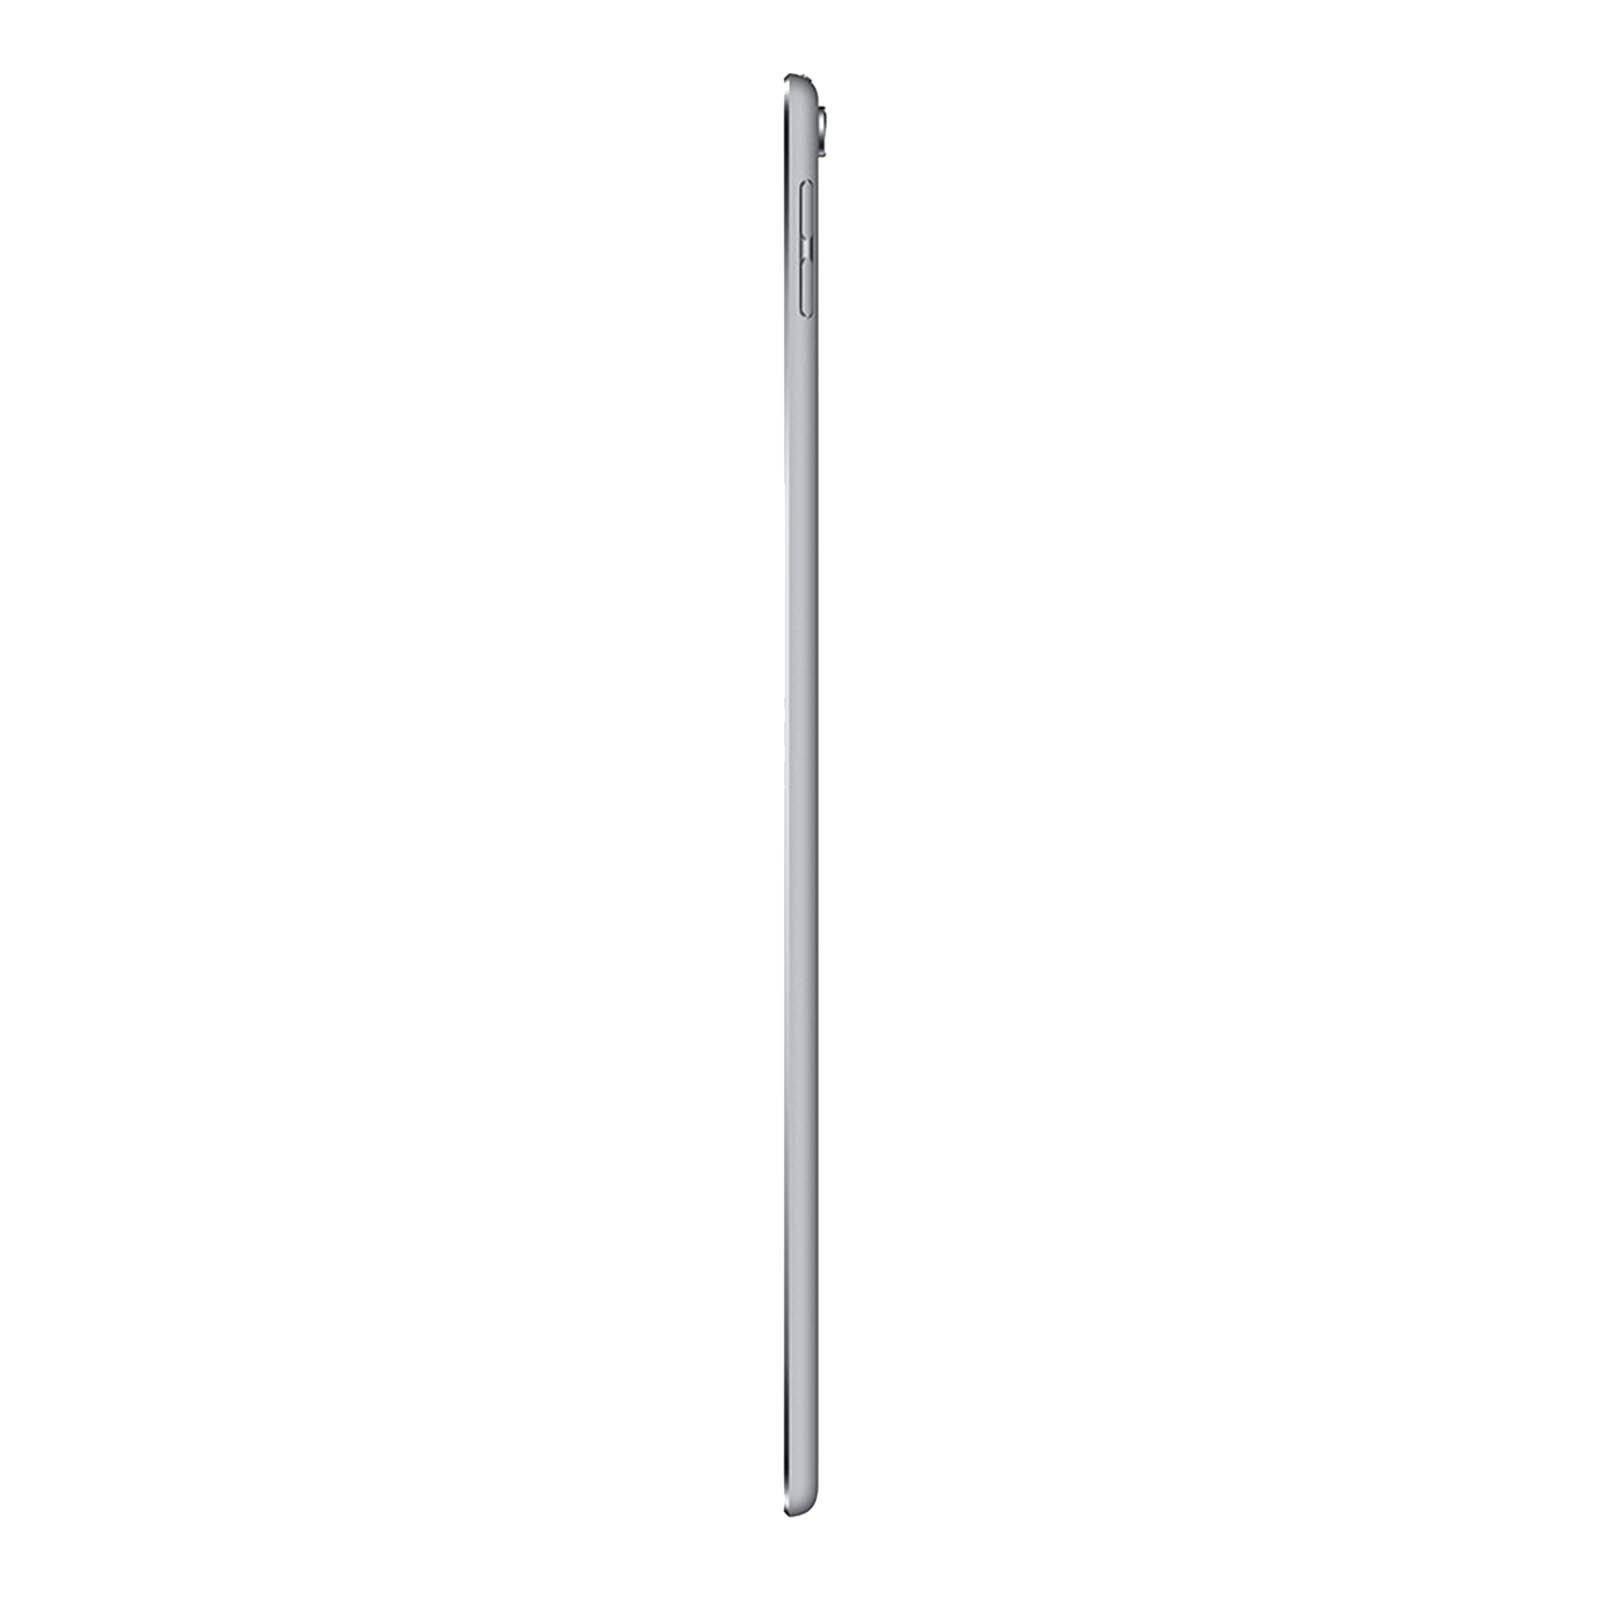 iPad Pro 10.5 Inch 512GB Space Grey Good - Unlocked